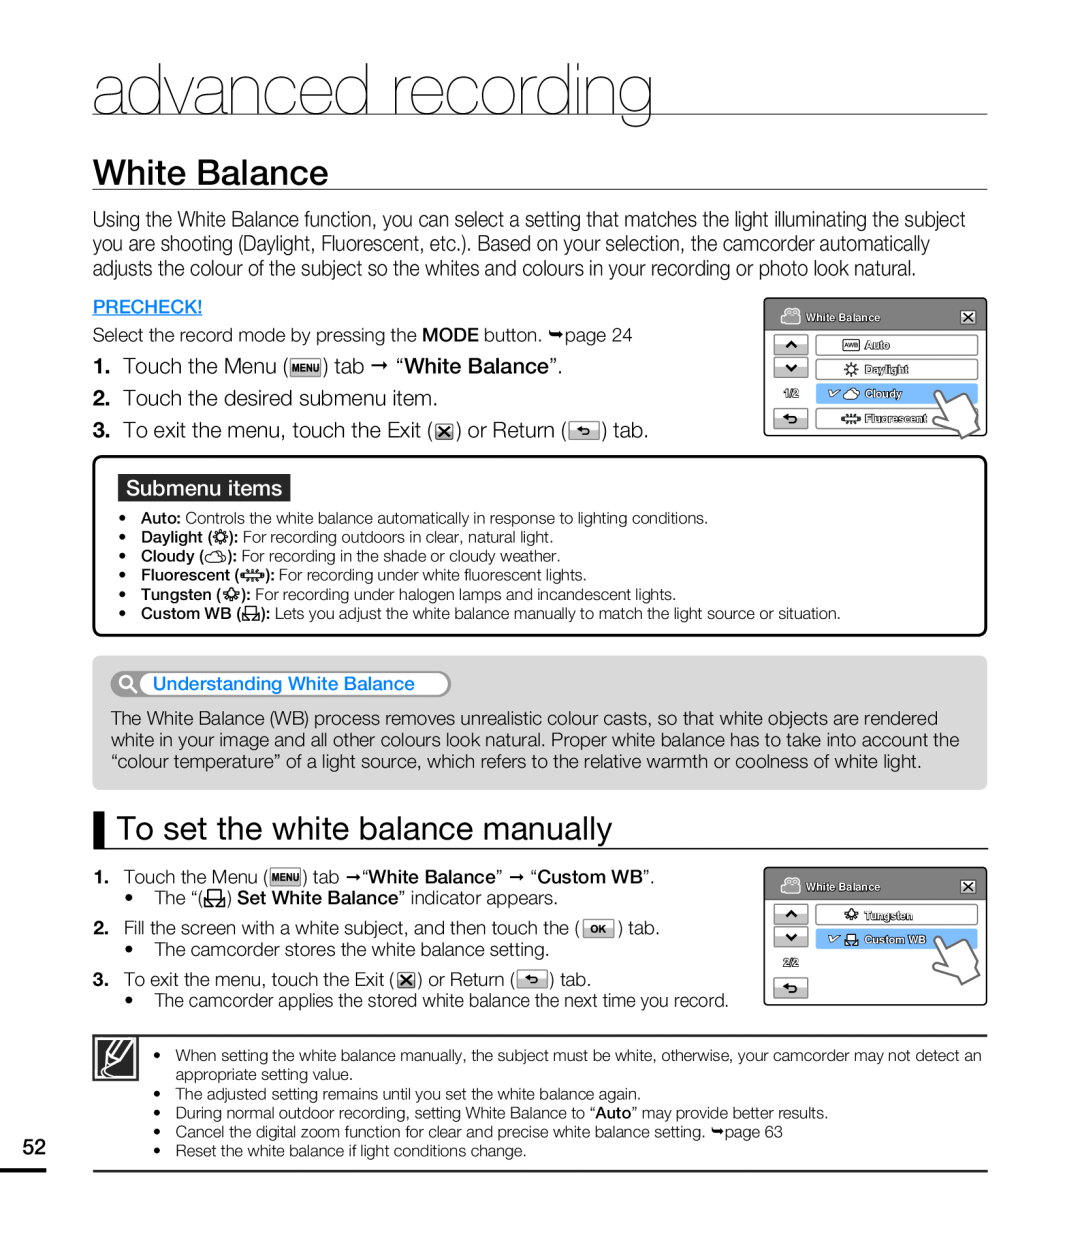 Samsung HMX-T10WP/XTR White Balance, To set the white balance manually, advanced recording, Submenu items, Precheck 